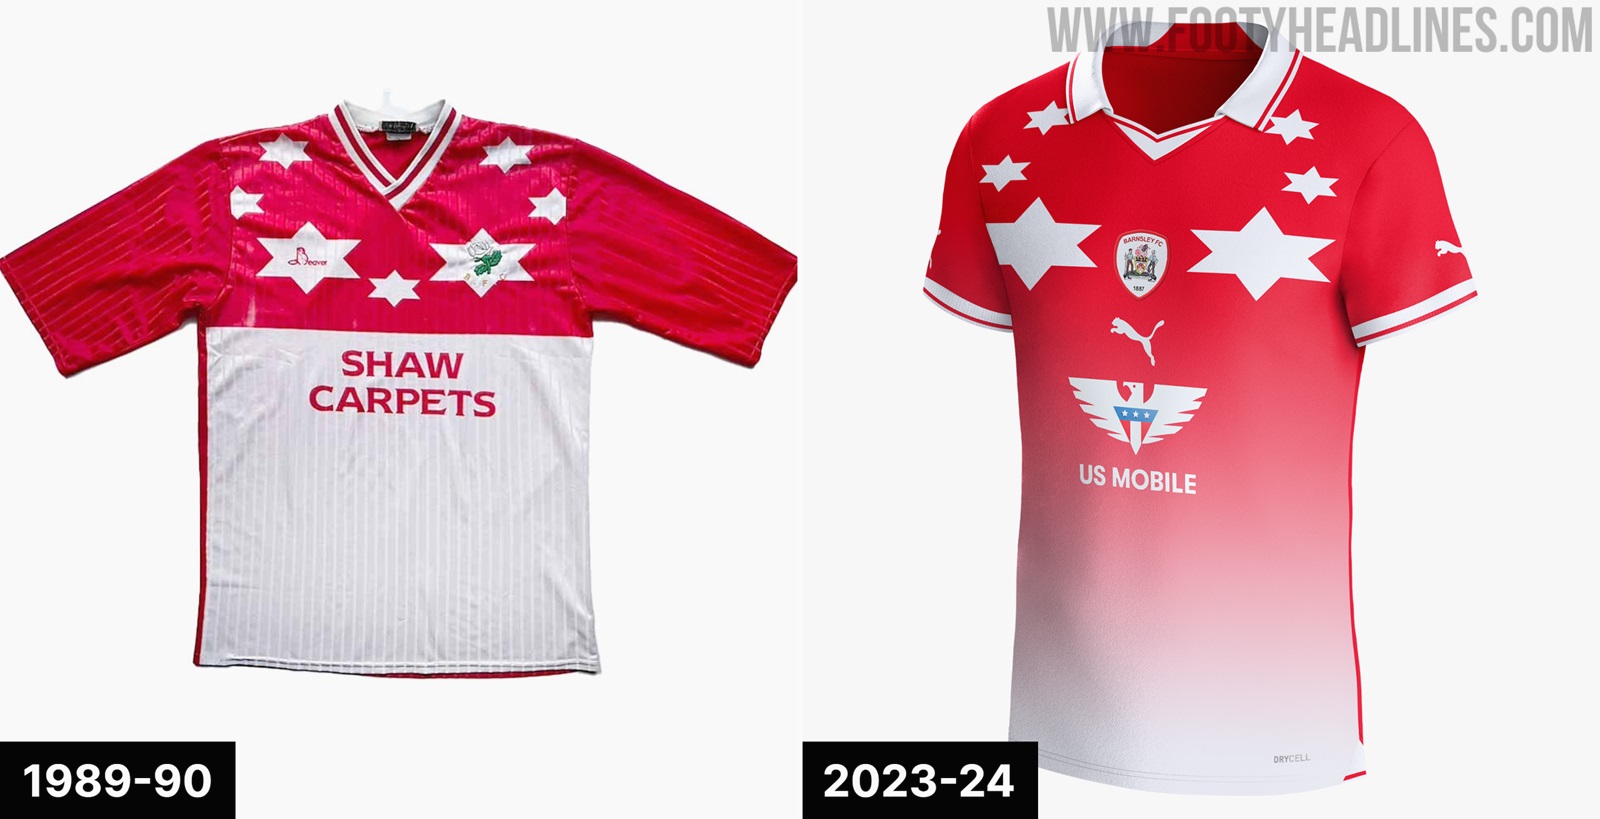 KidSuper and PUMA Collaborate on Barnsley FC's 2023/24 Kits